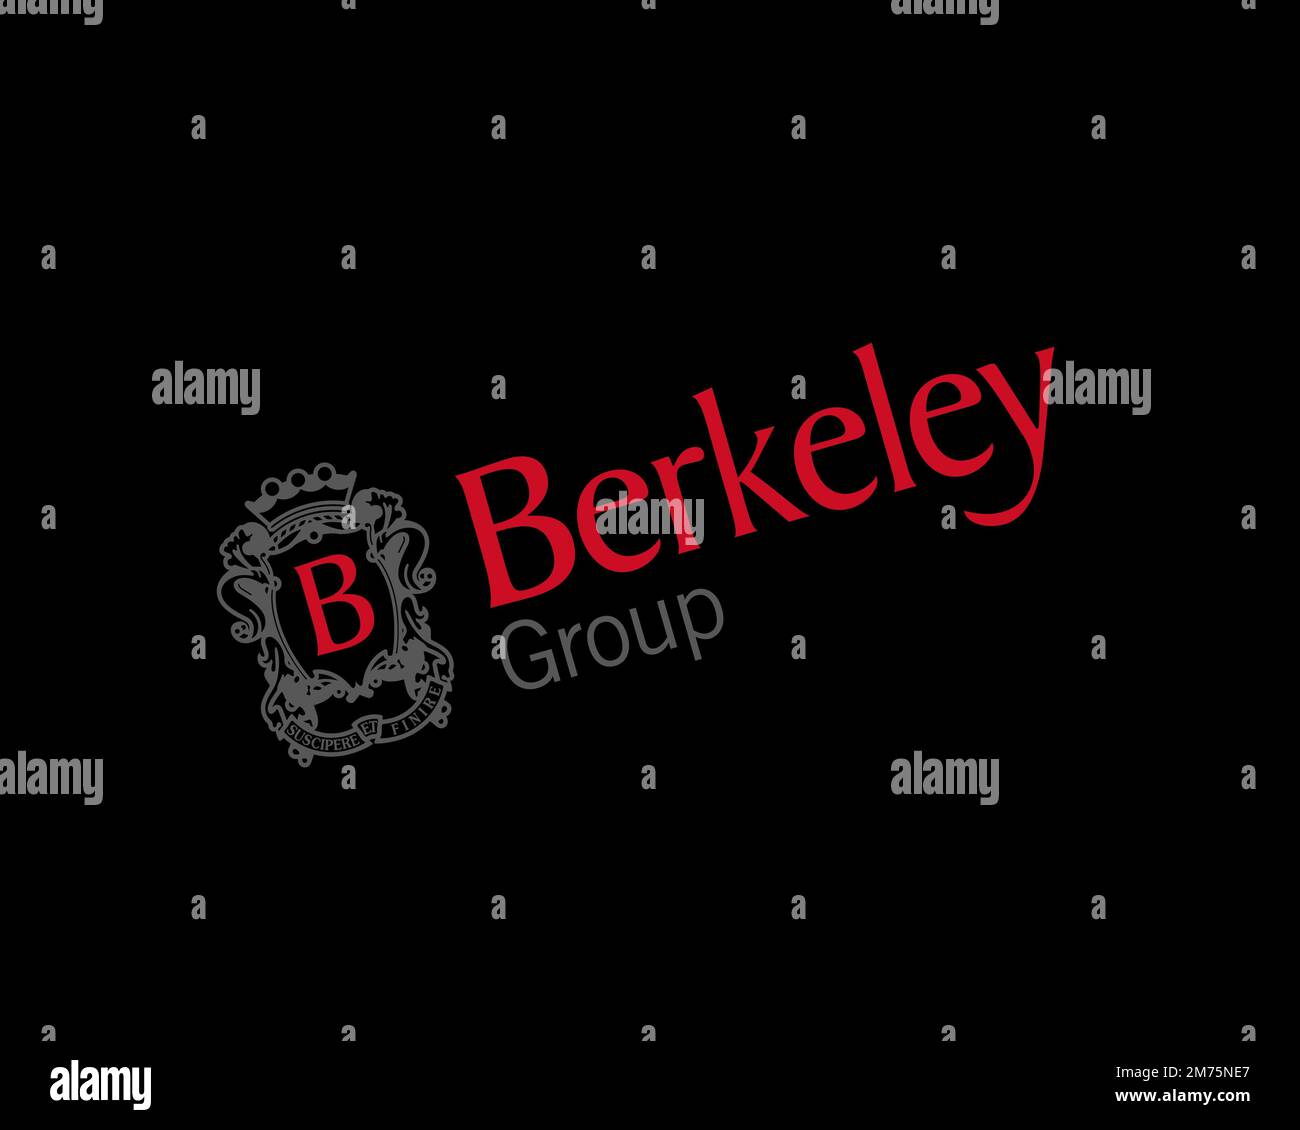 Berkeley Group Holdings, rotated logo, black background Stock Photo - Alamy